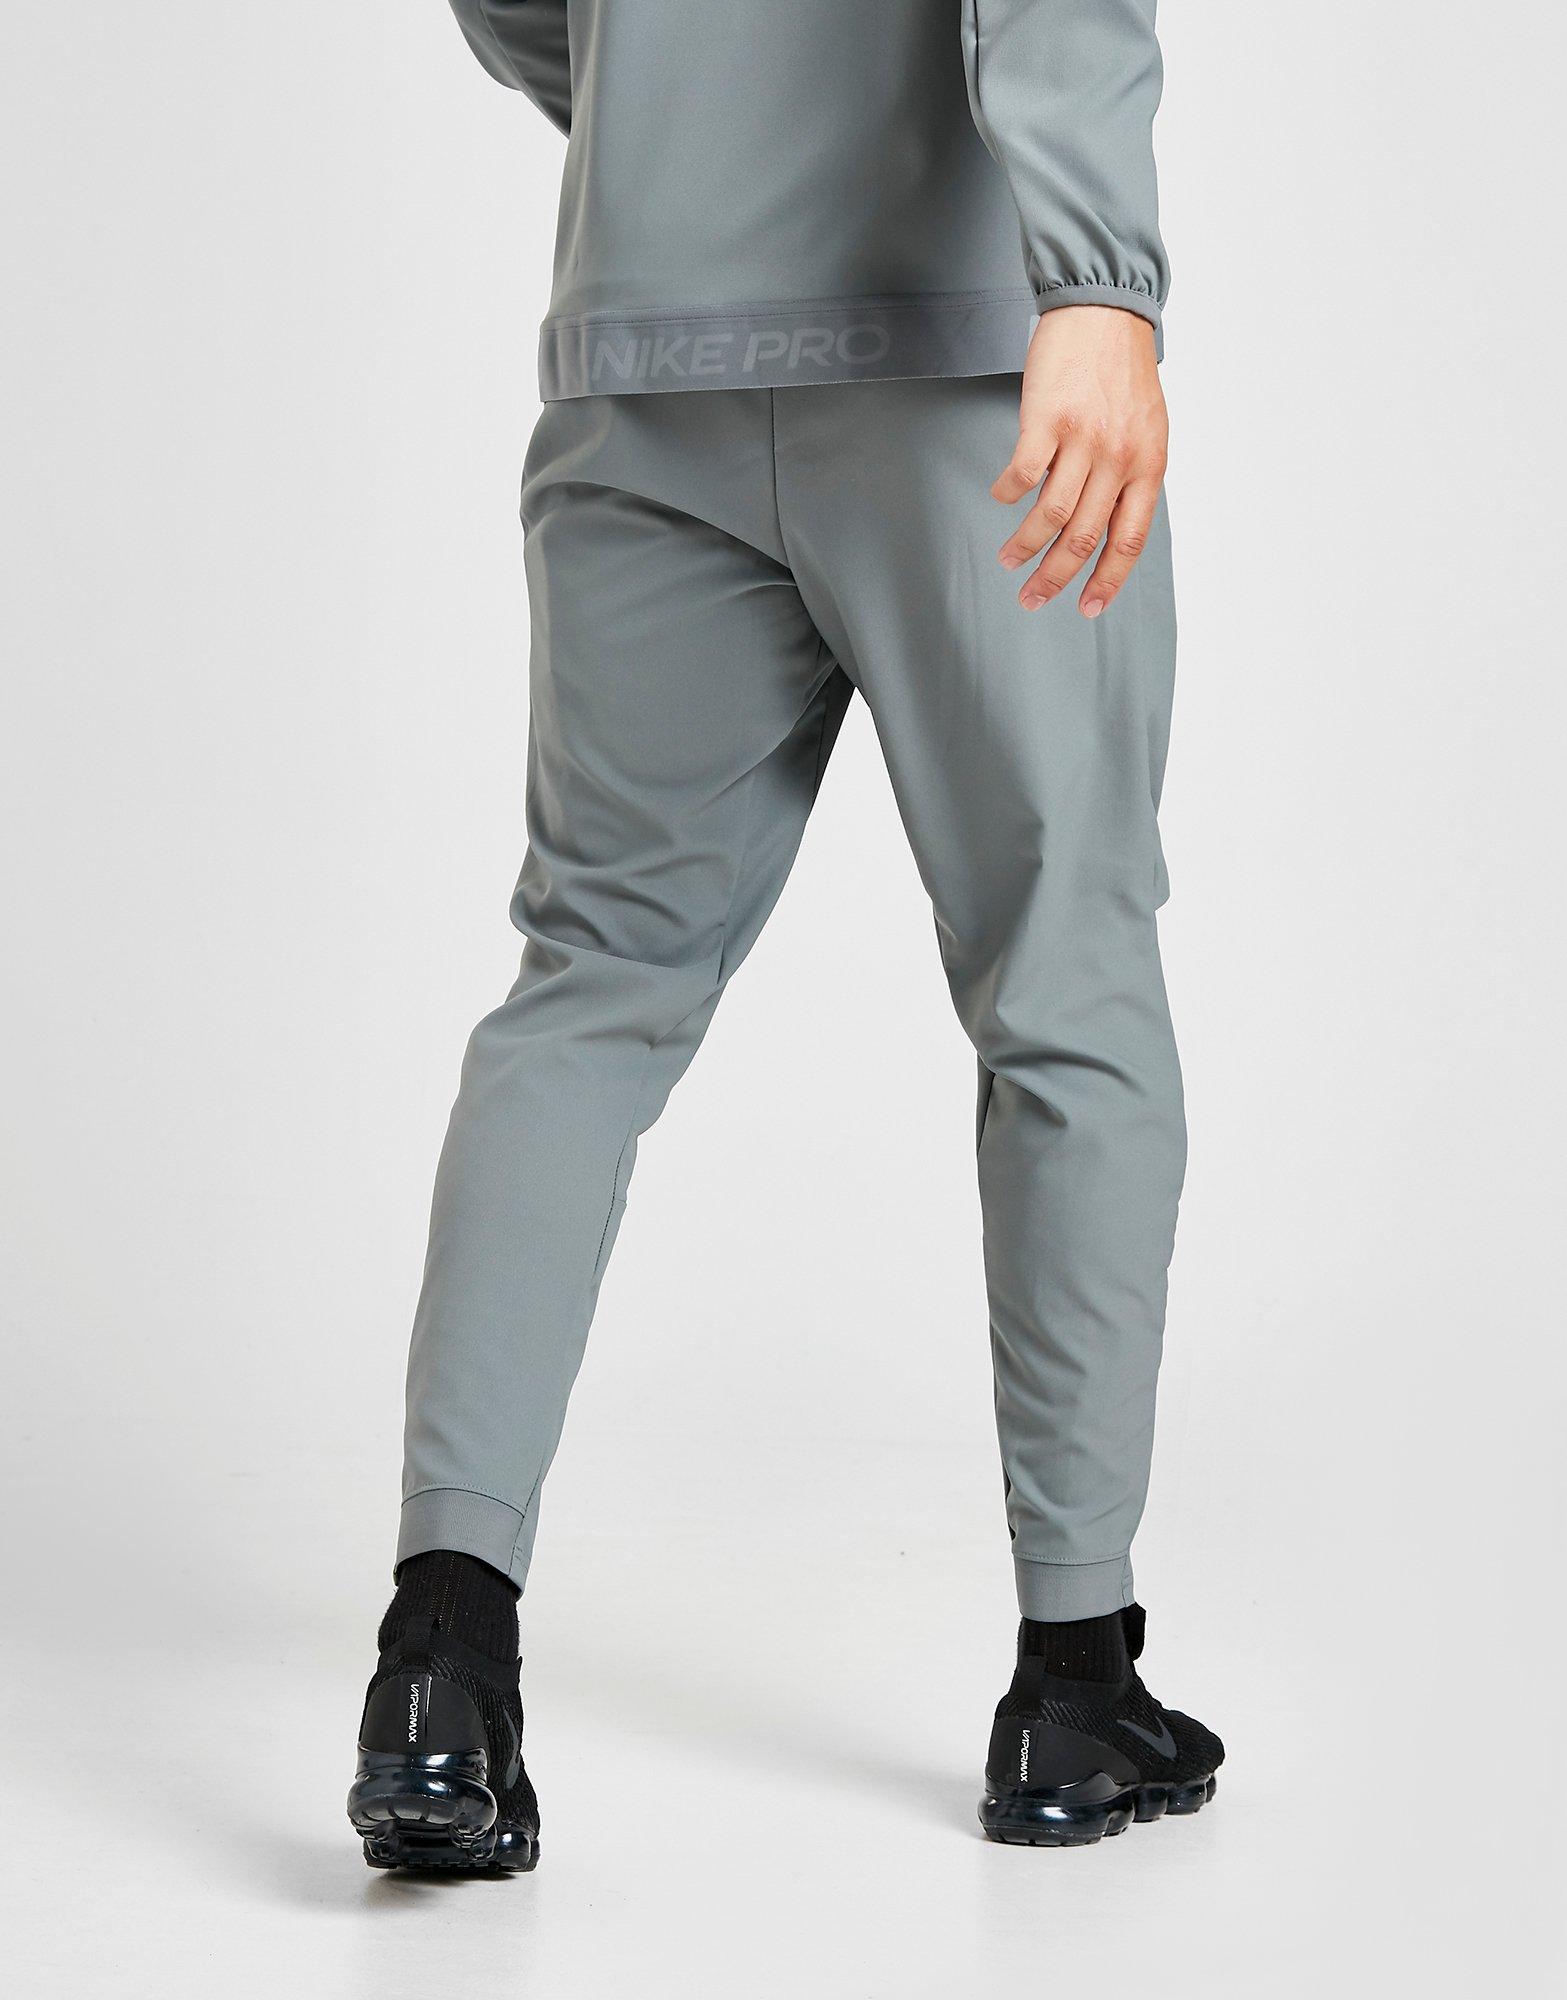 nike flex pro track pants grey